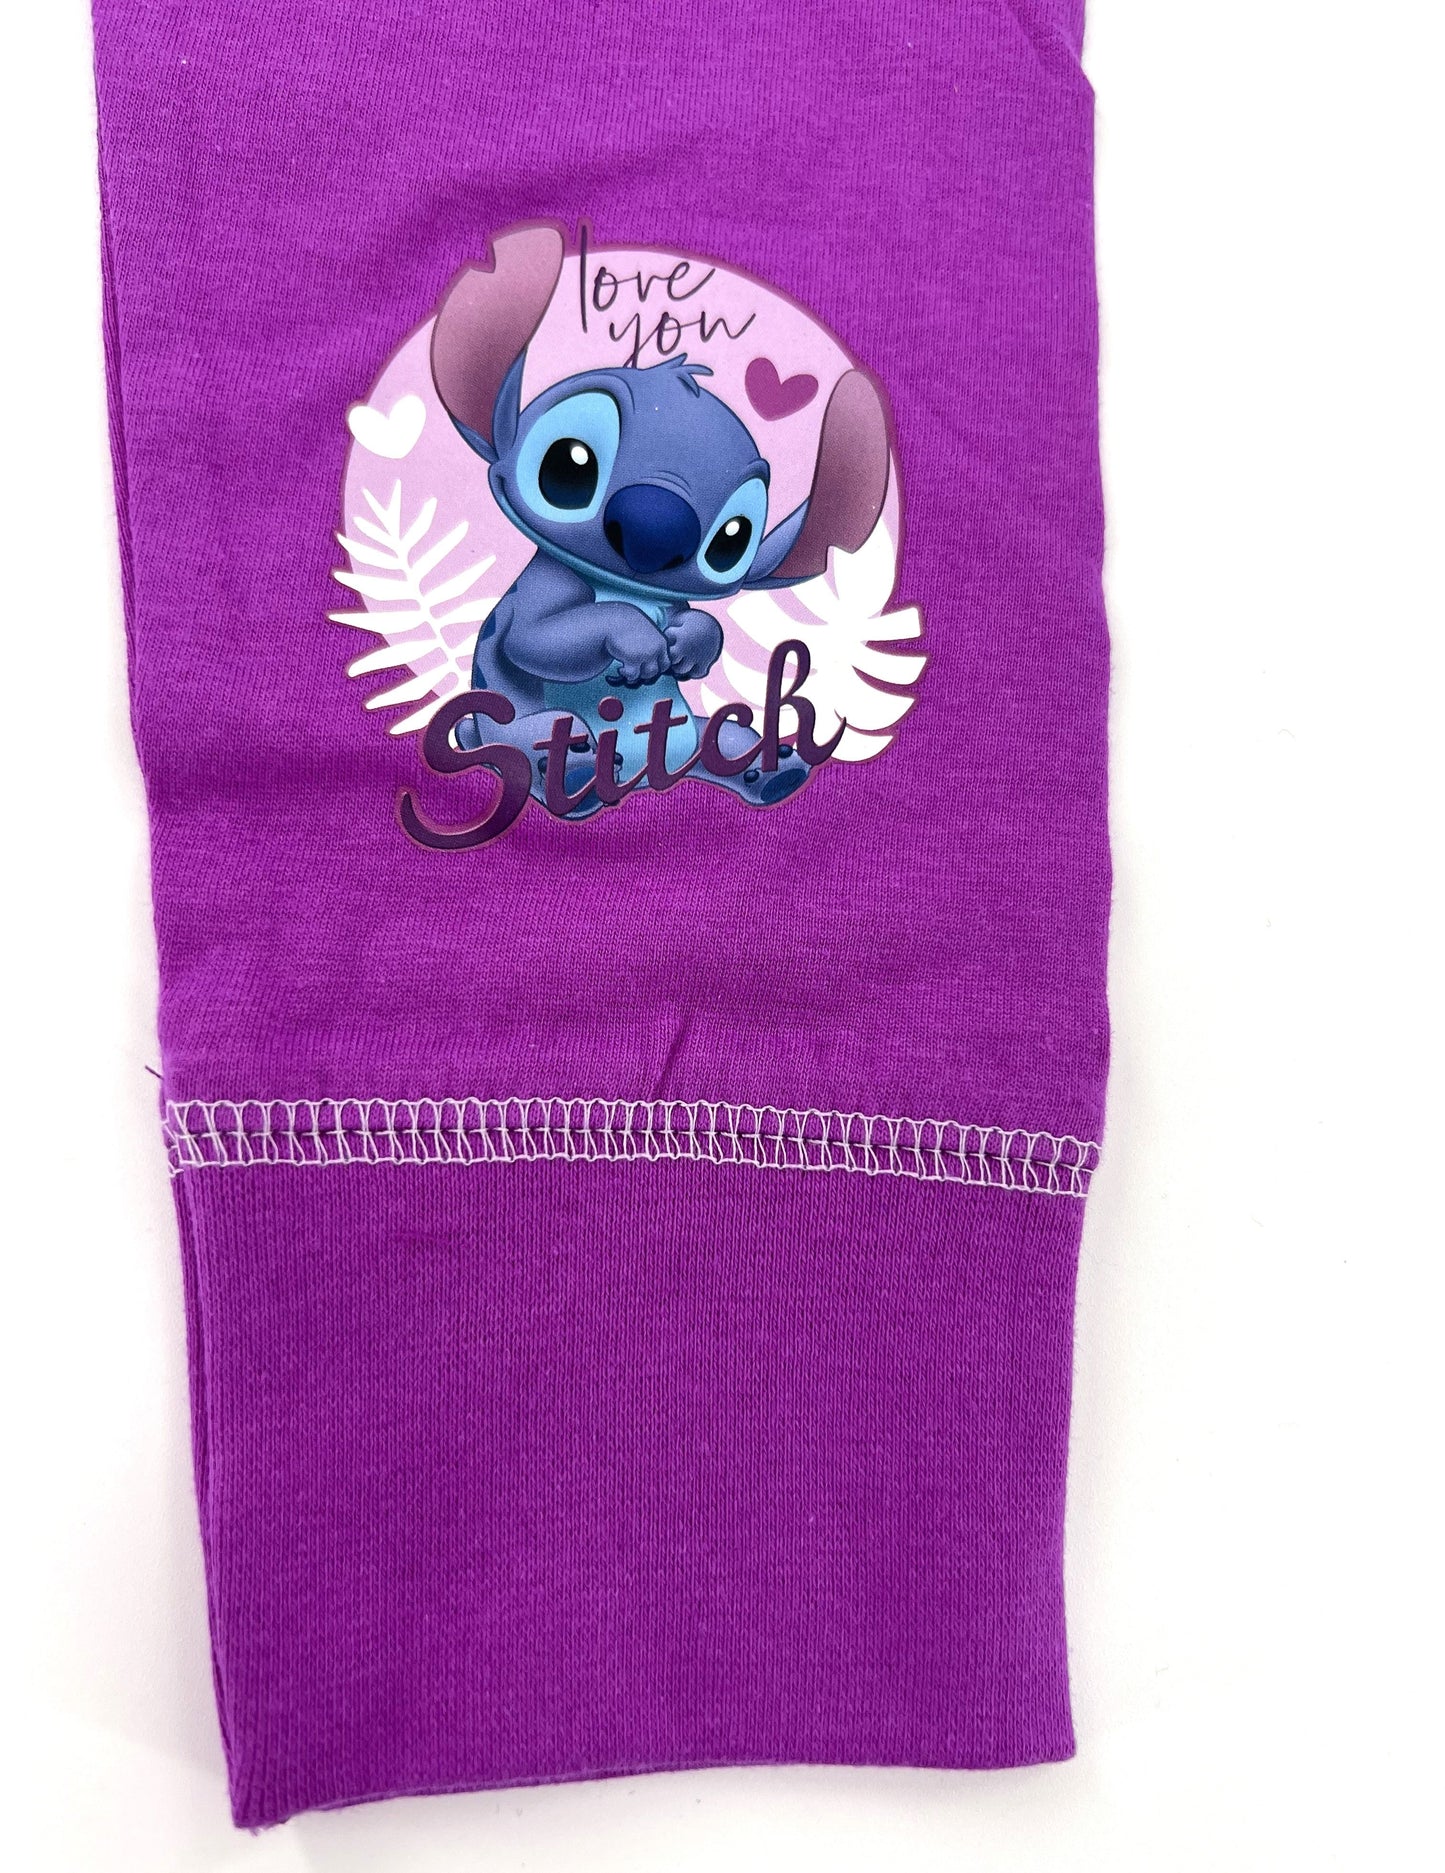 Stitch Girl's Pyjama Set "Love You" 4-10 Years. Cotton Rich,